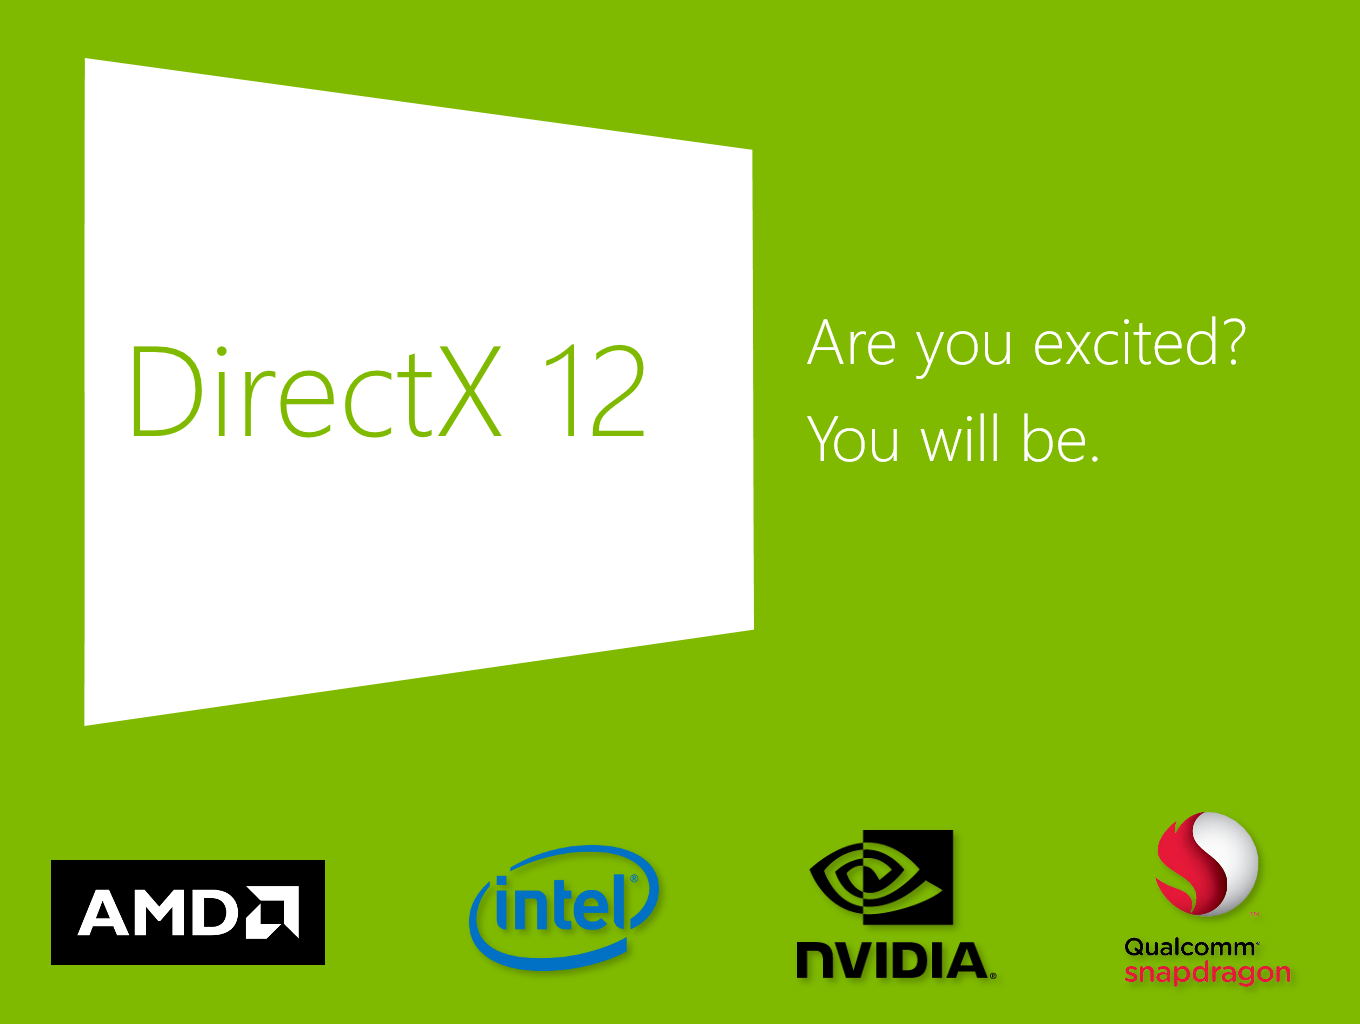 DirectX 12 теперь работает на Windows 7 » MSReview